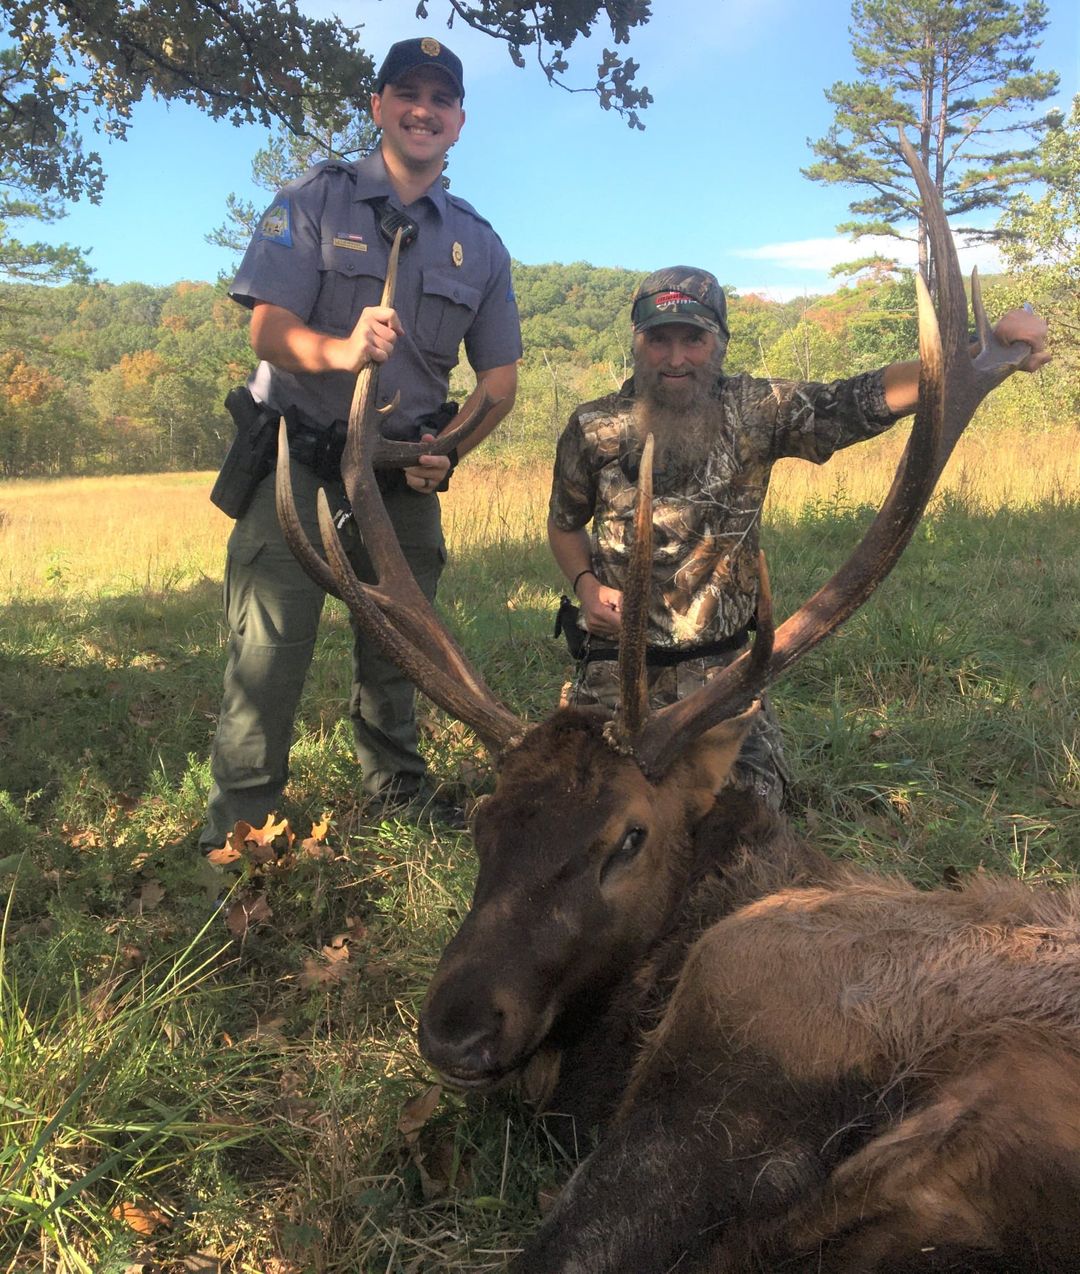 Chris Irick of Pleasant Hope harvested the first elk by archery methods in Missouri’s modern elk hunting history. 